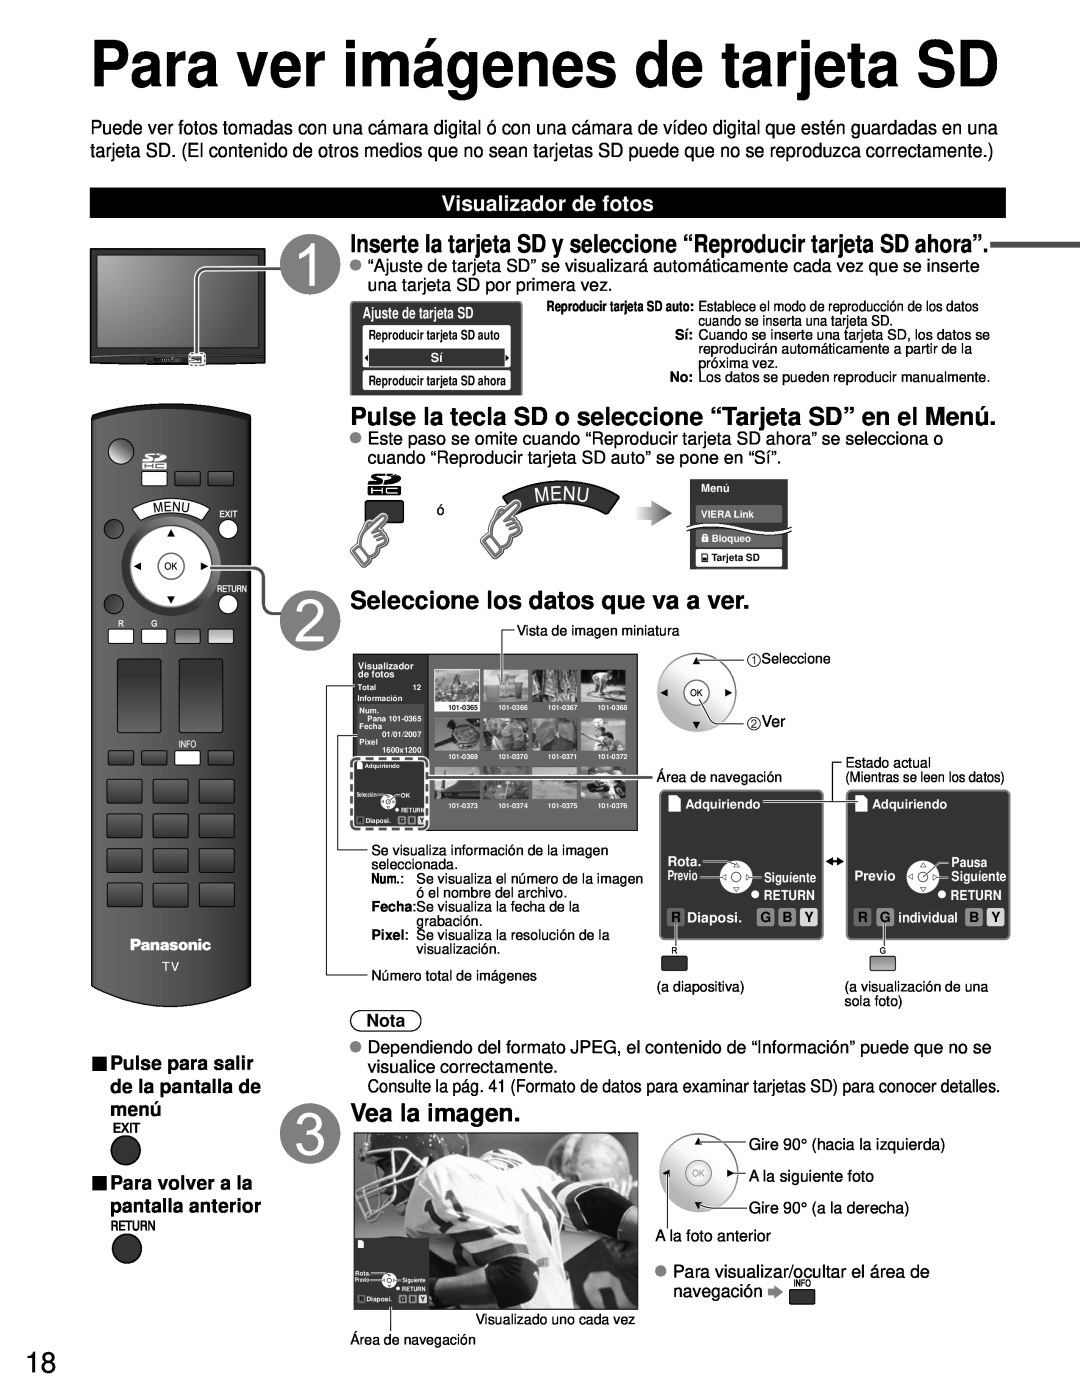 Panasonic TH-50PZ80U Para ver imágenes de tarjeta SD, Pulse la tecla SD o seleccione “Tarjeta SD” en el Menú, menú, Nota 